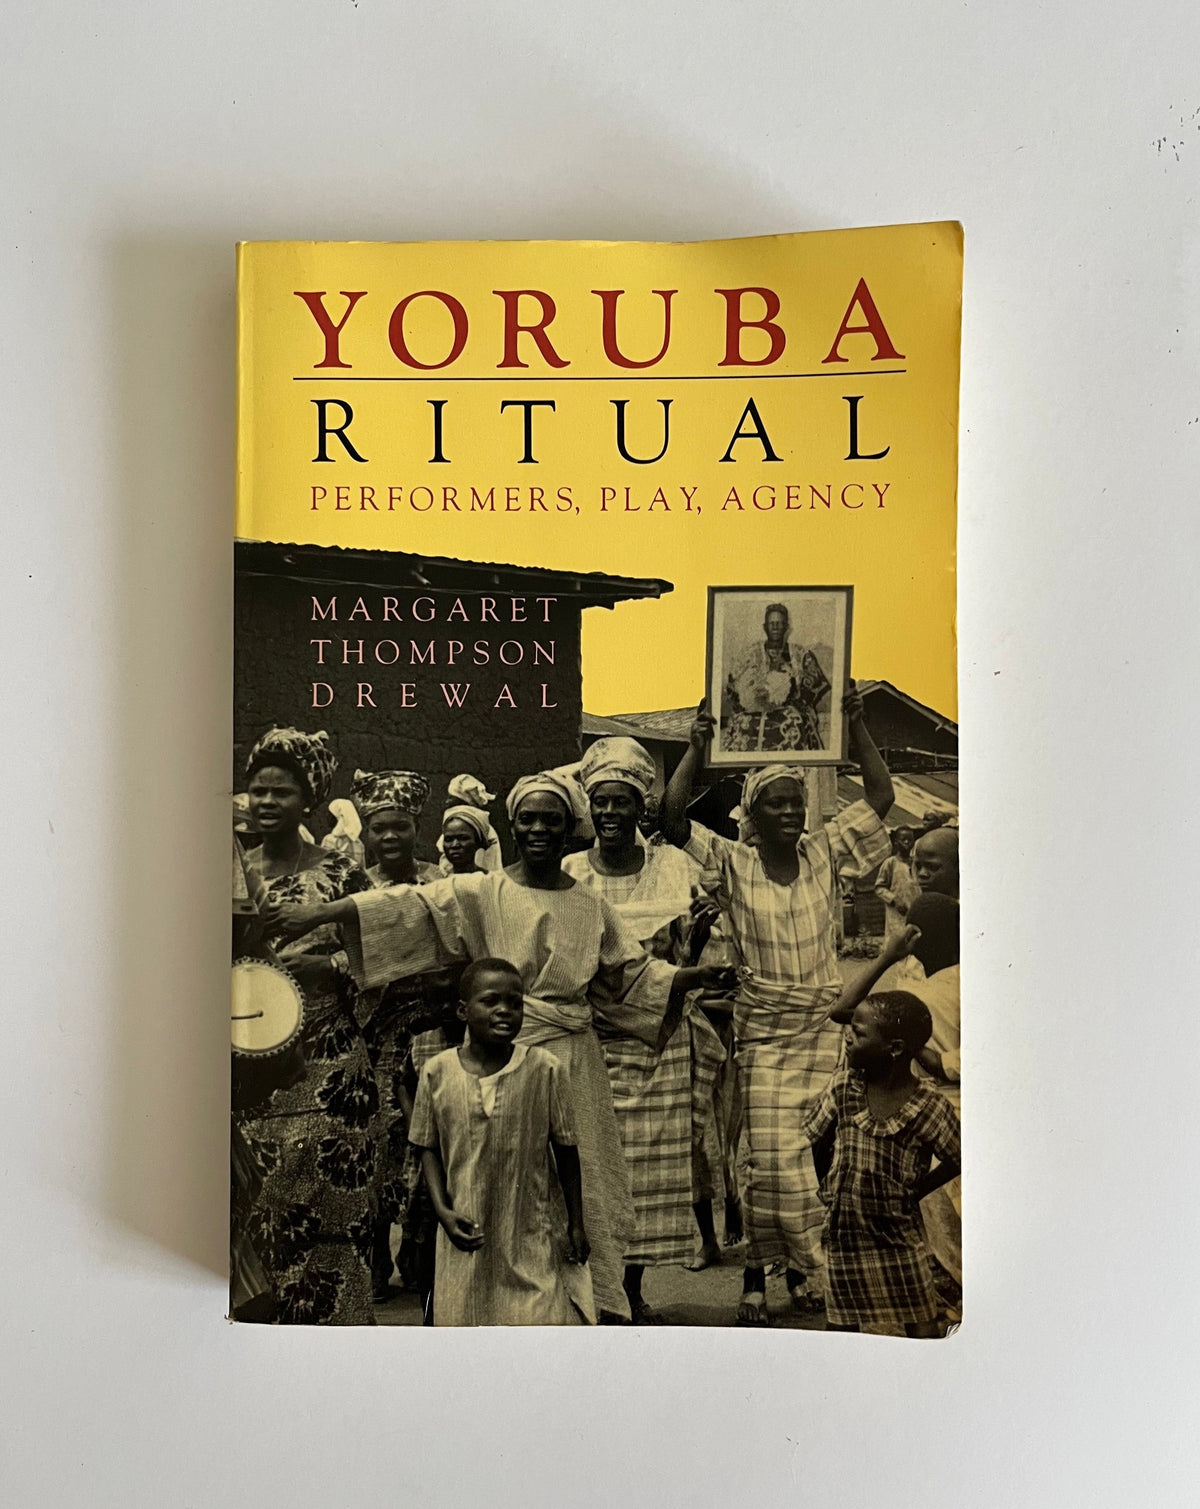 Yoruba Ritual: Performers, Plays, Agency by Margaret Thompson Drewal